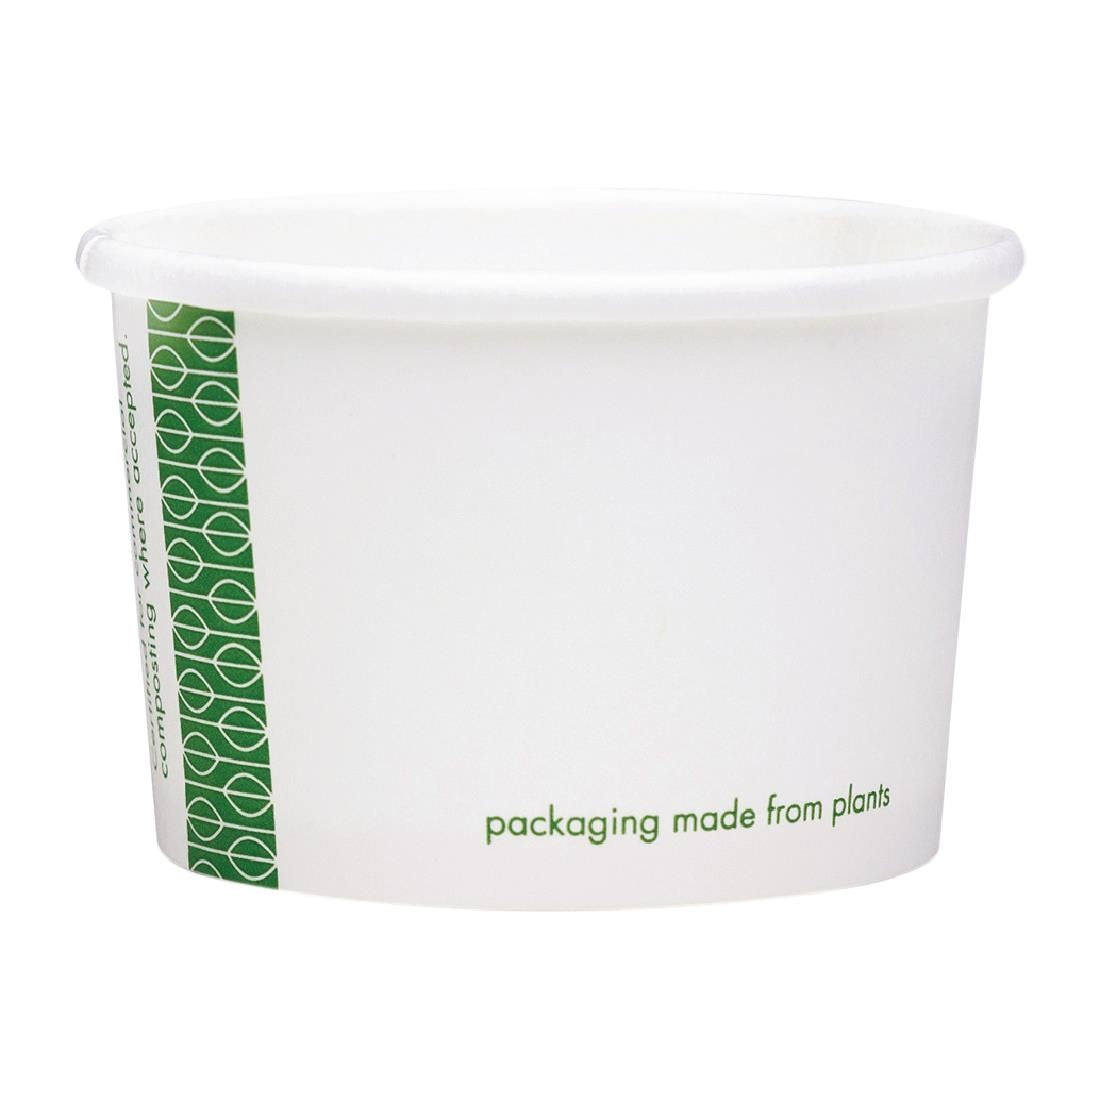 Vegware Compostable Hot Food Pots 110ml / 4oz (Pack of 1000)